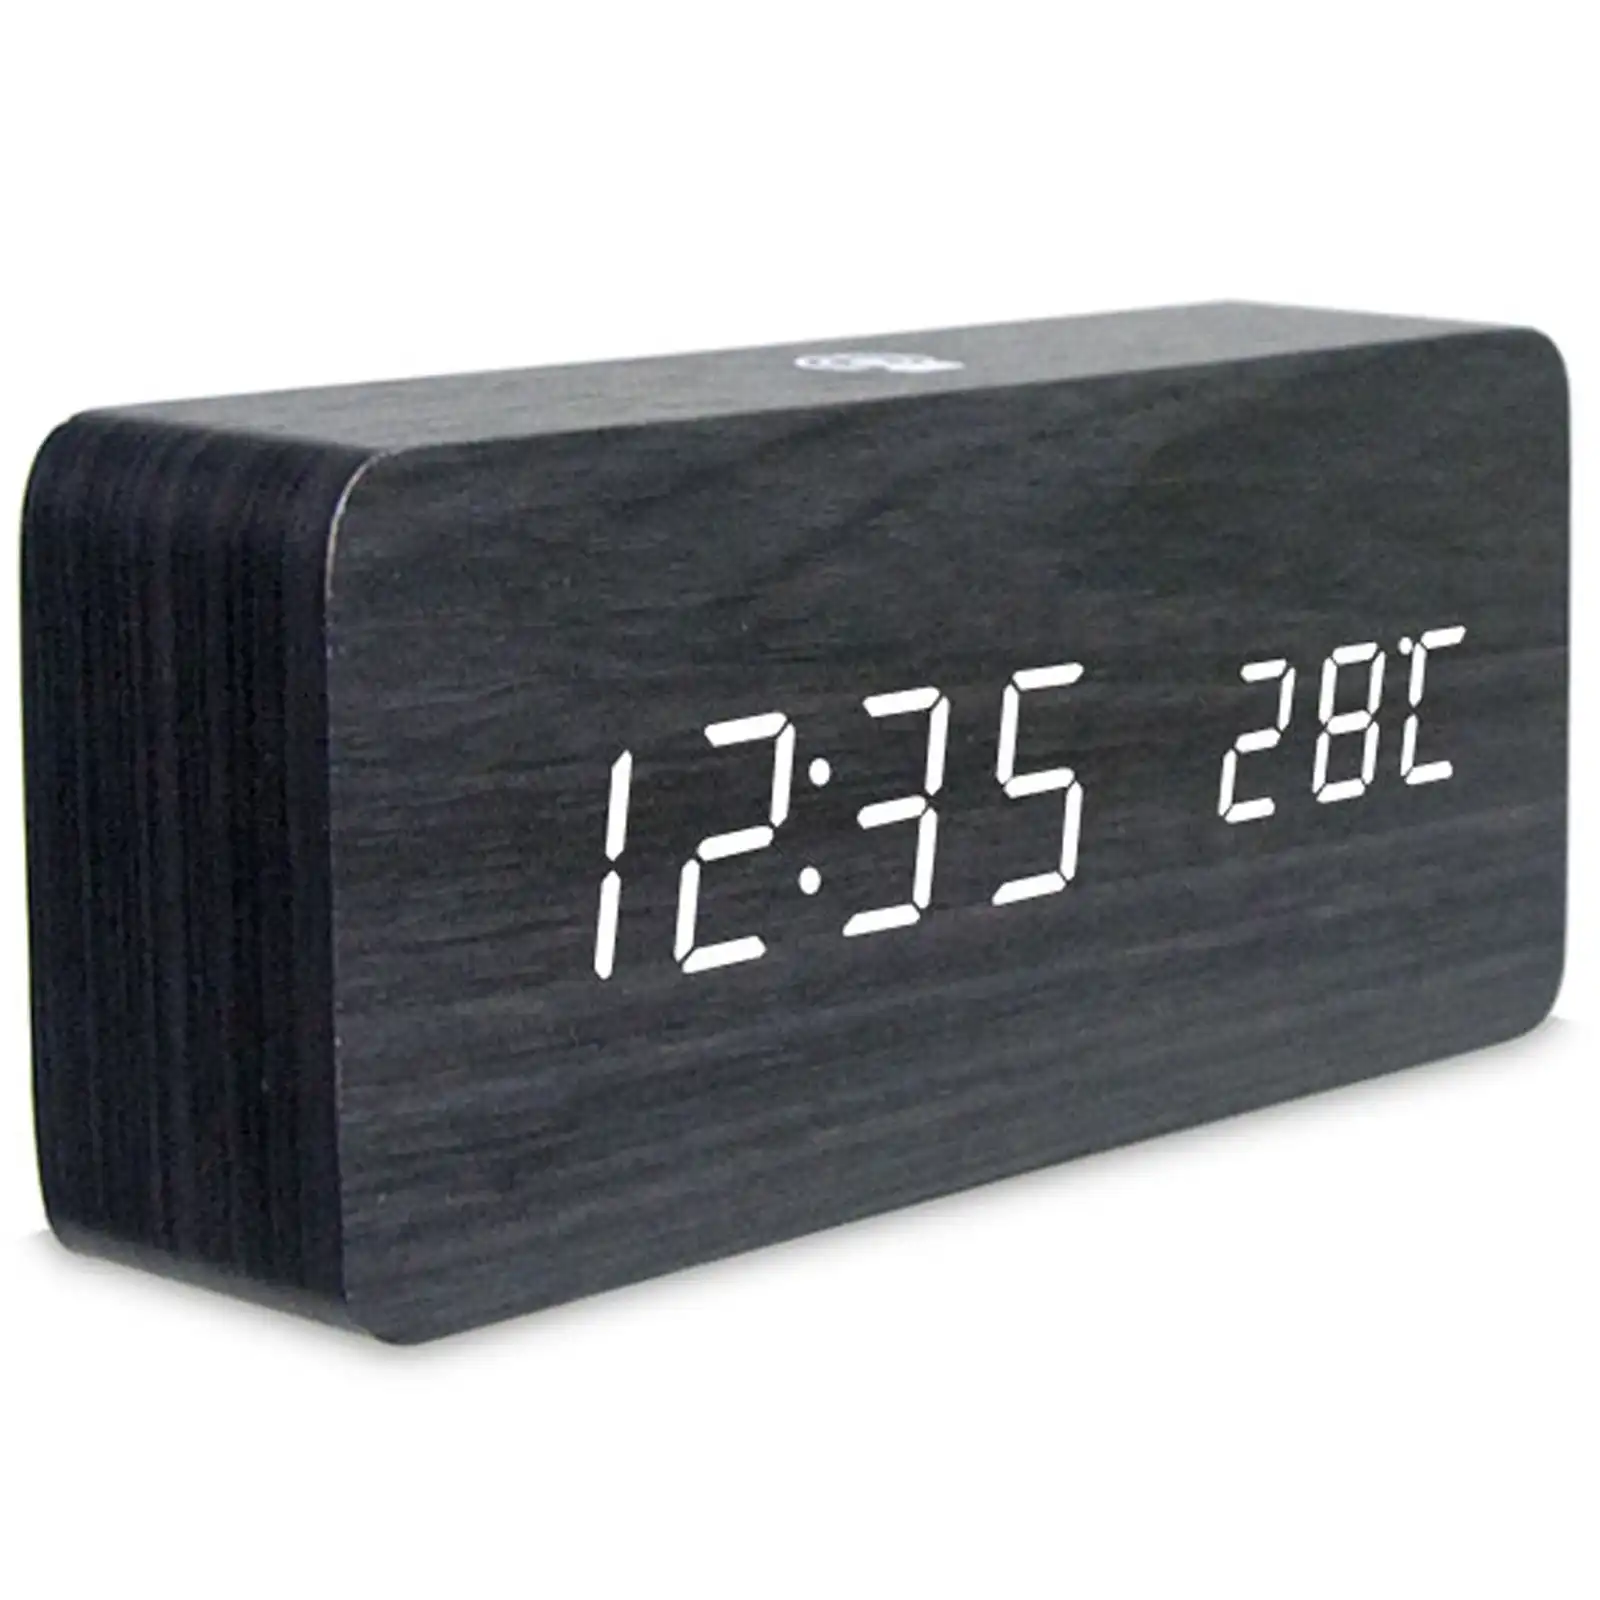 TODO Rechargeable LED Digital Alarm Clock Woodgrain USB Android iOS Control APP - Black